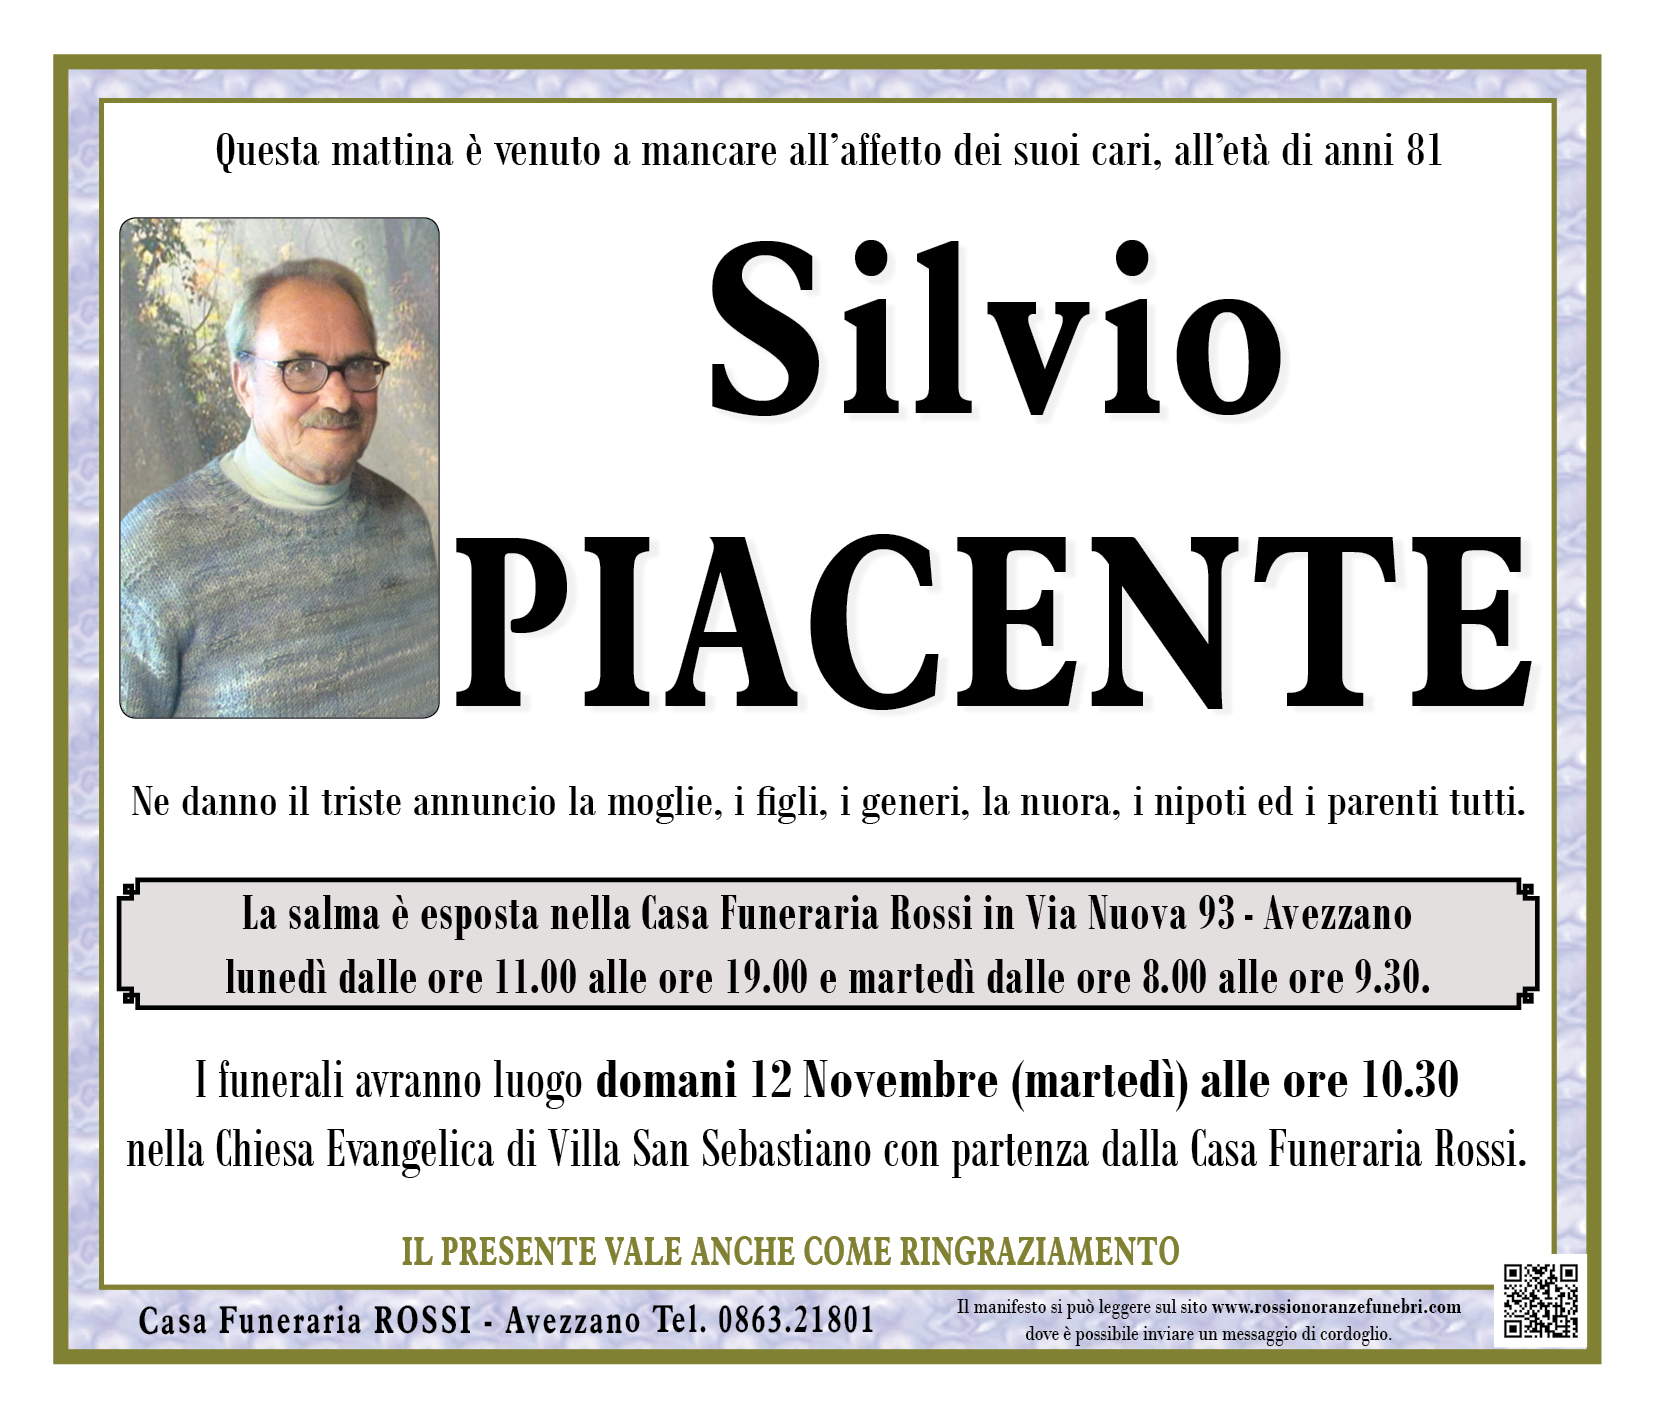 Silvio Piacente